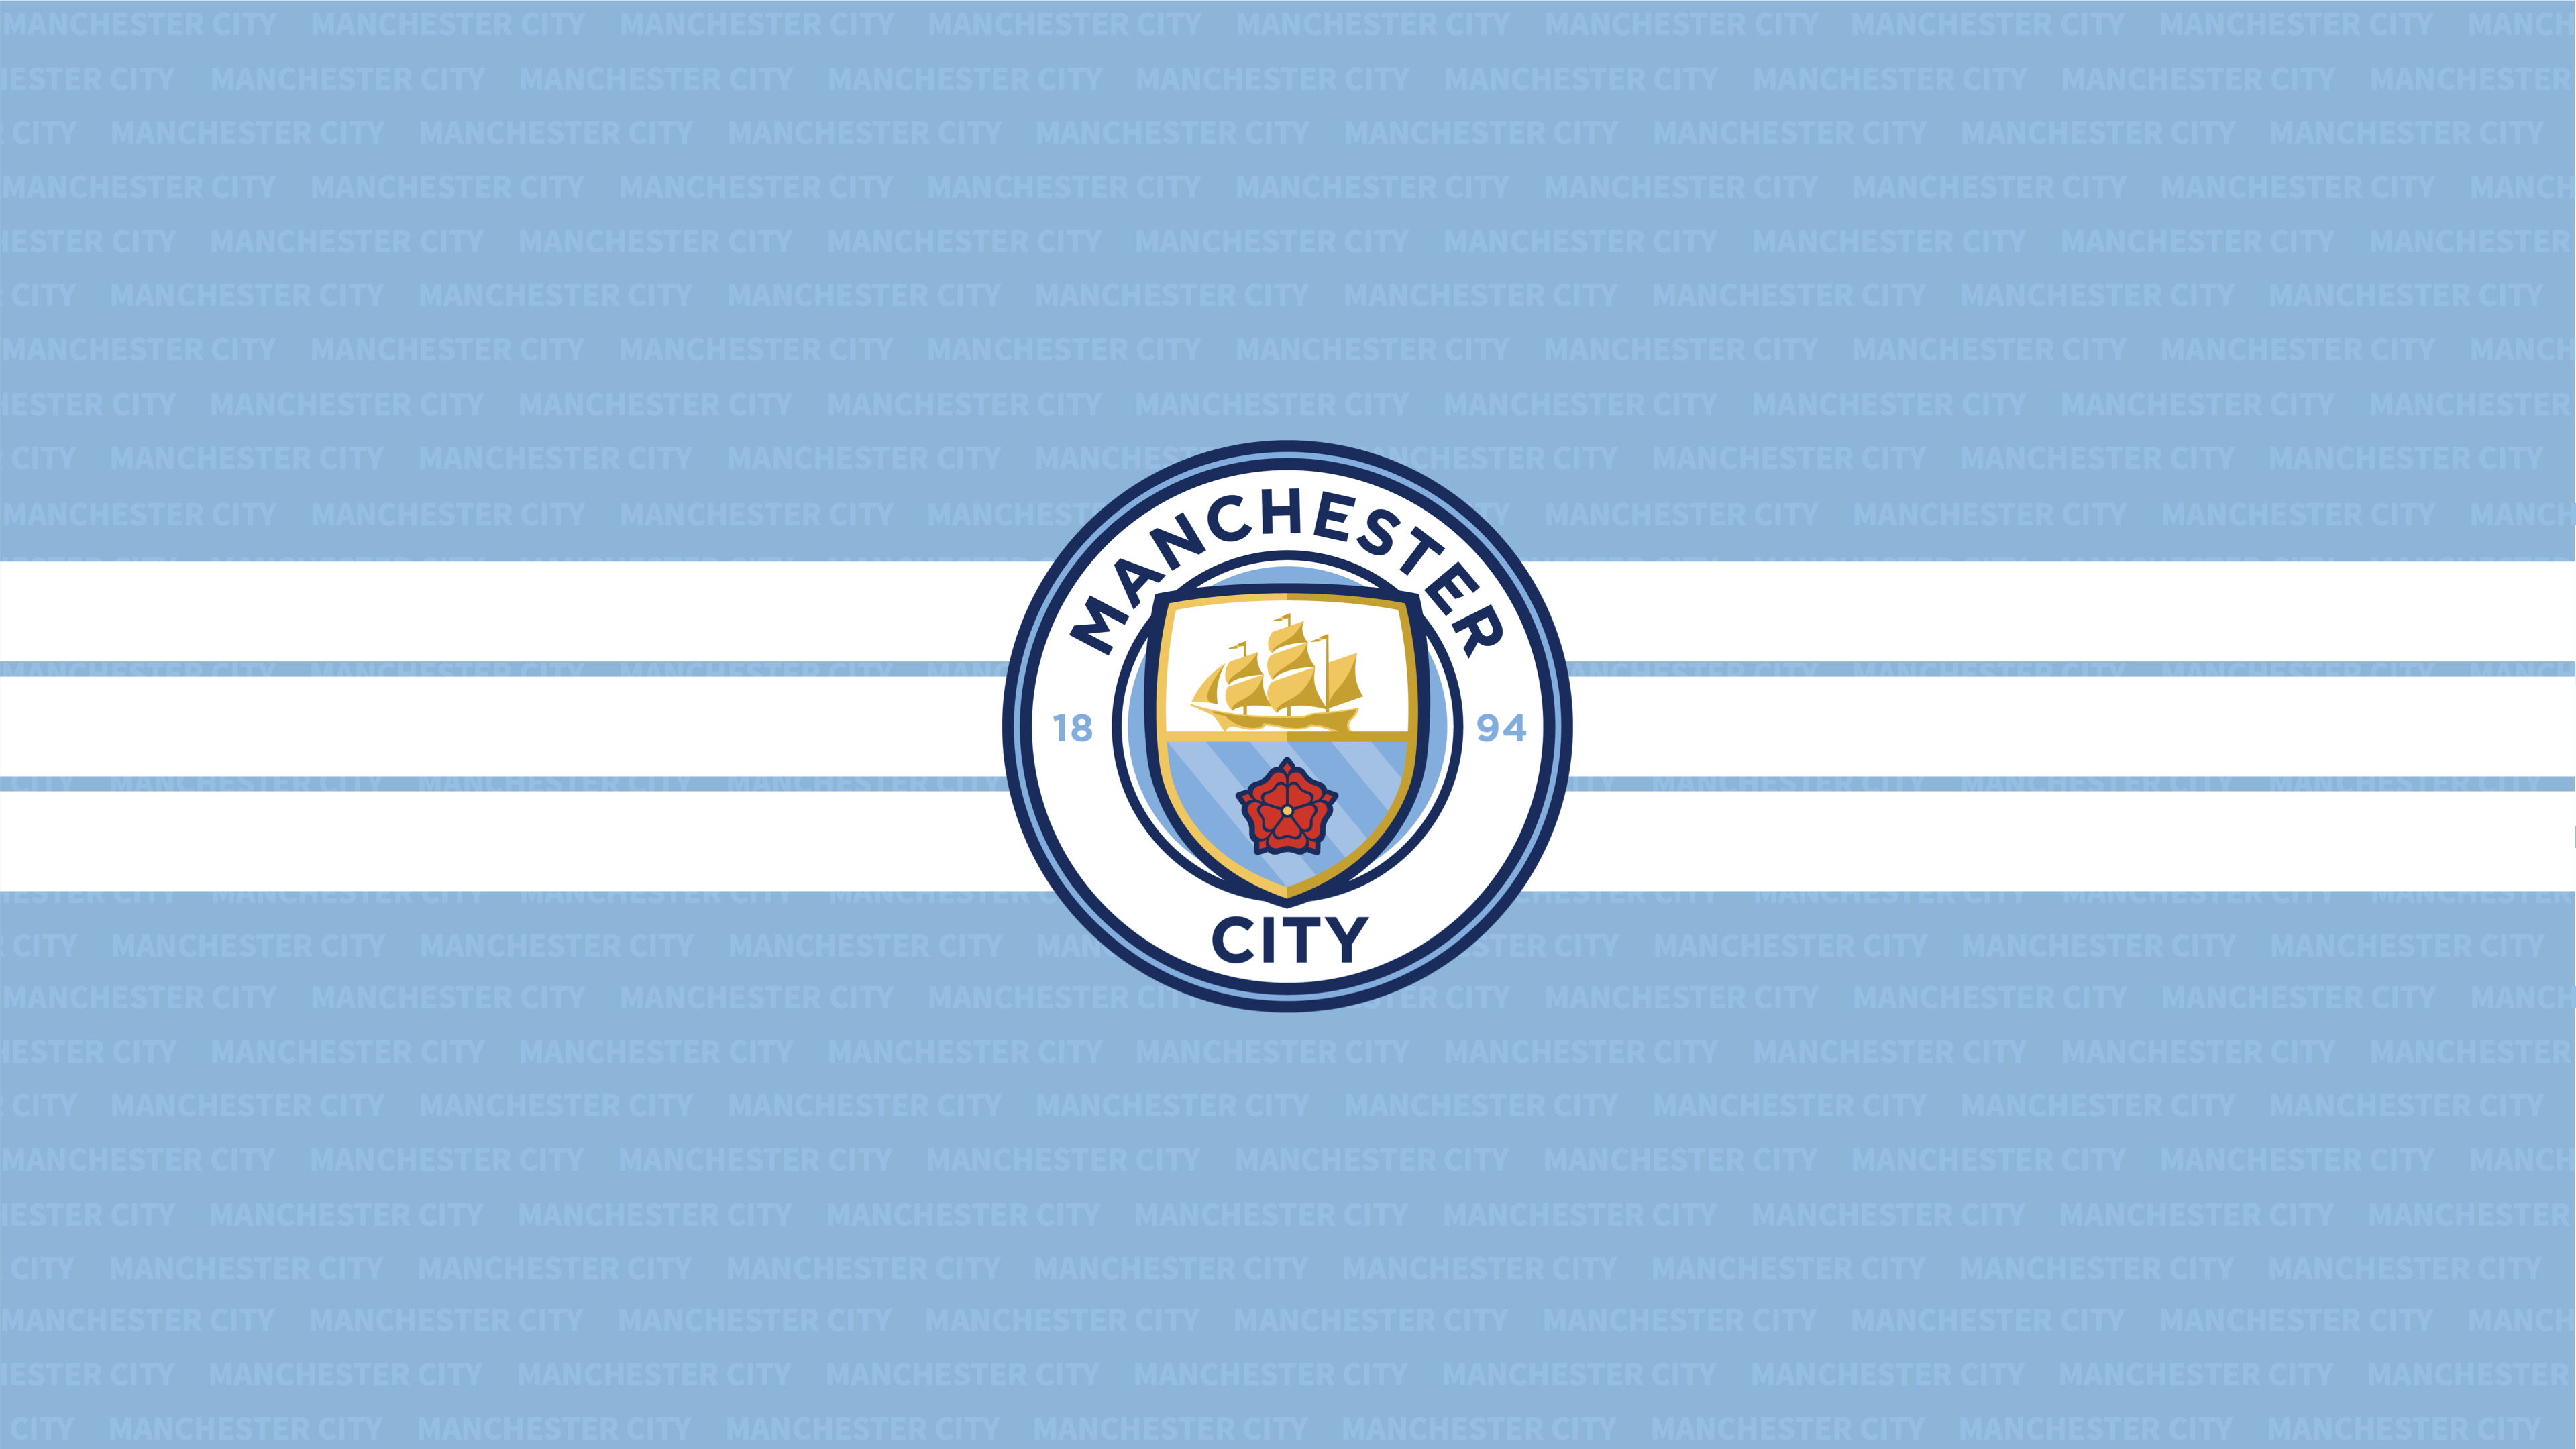 Re Post Manchester City 4K Wallpaper .reddit.com